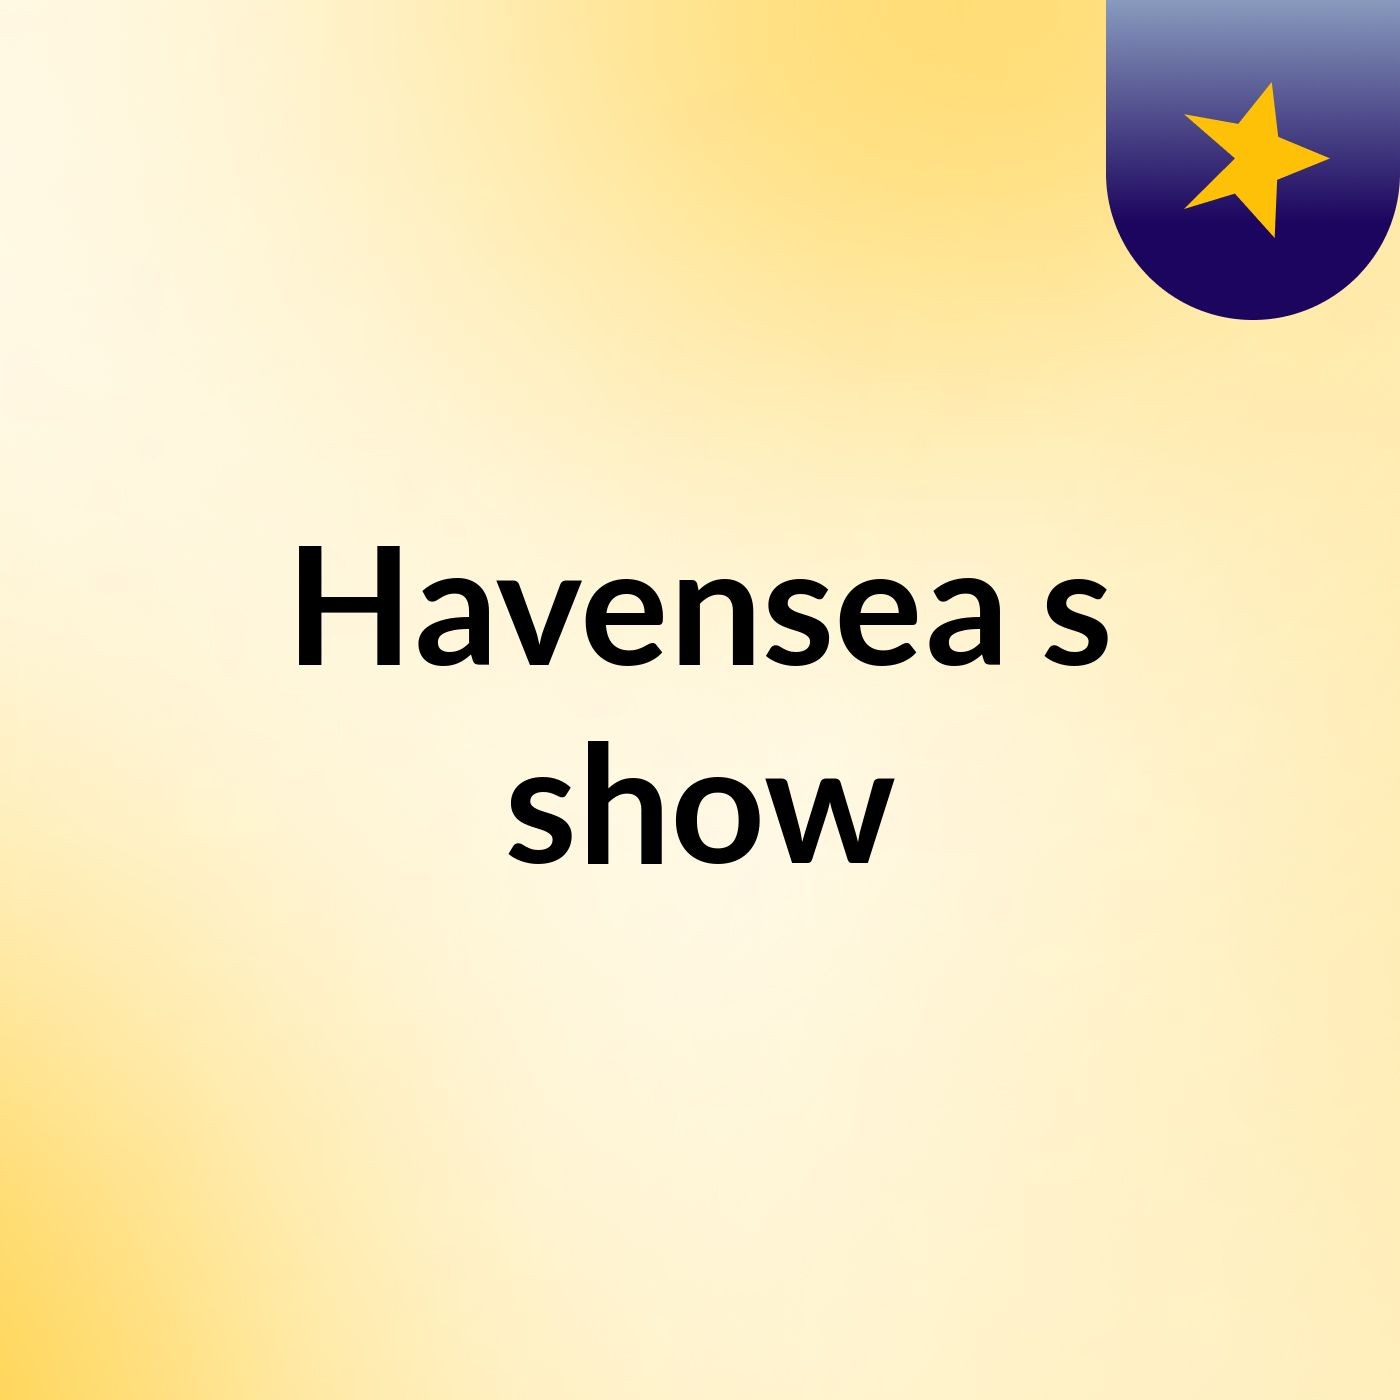 Havensea's show